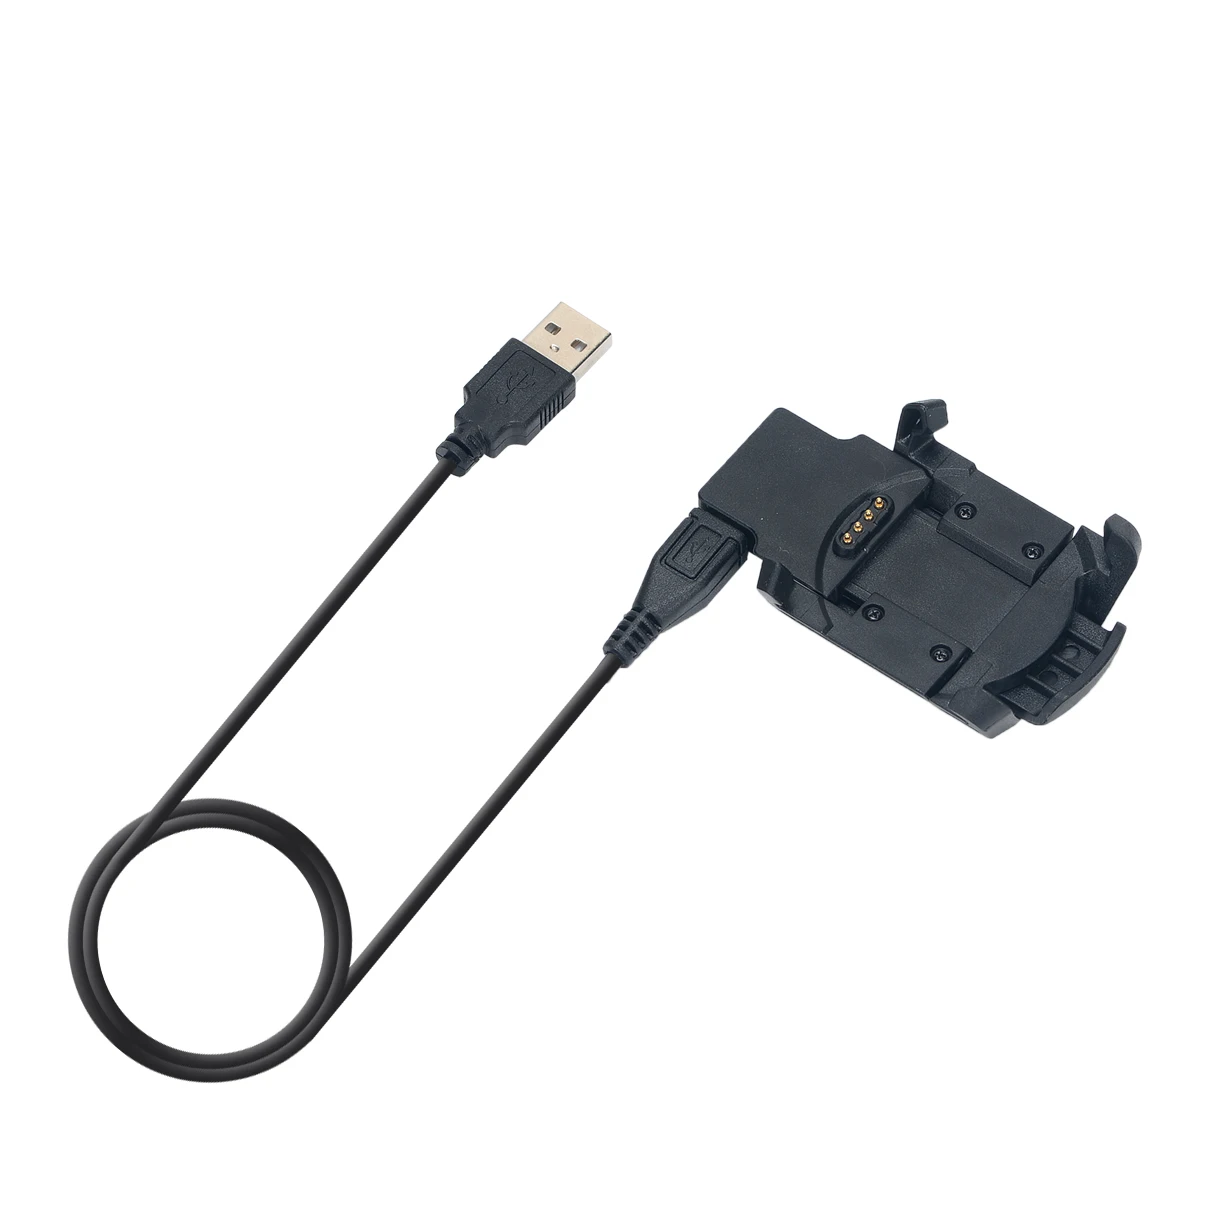 

Replacement USB Data Sync Charging Cable Cradle Dock Charger Clip for Garmin Fenix 3 HR/Fenix 3 / Quatix 3 Smart Watch